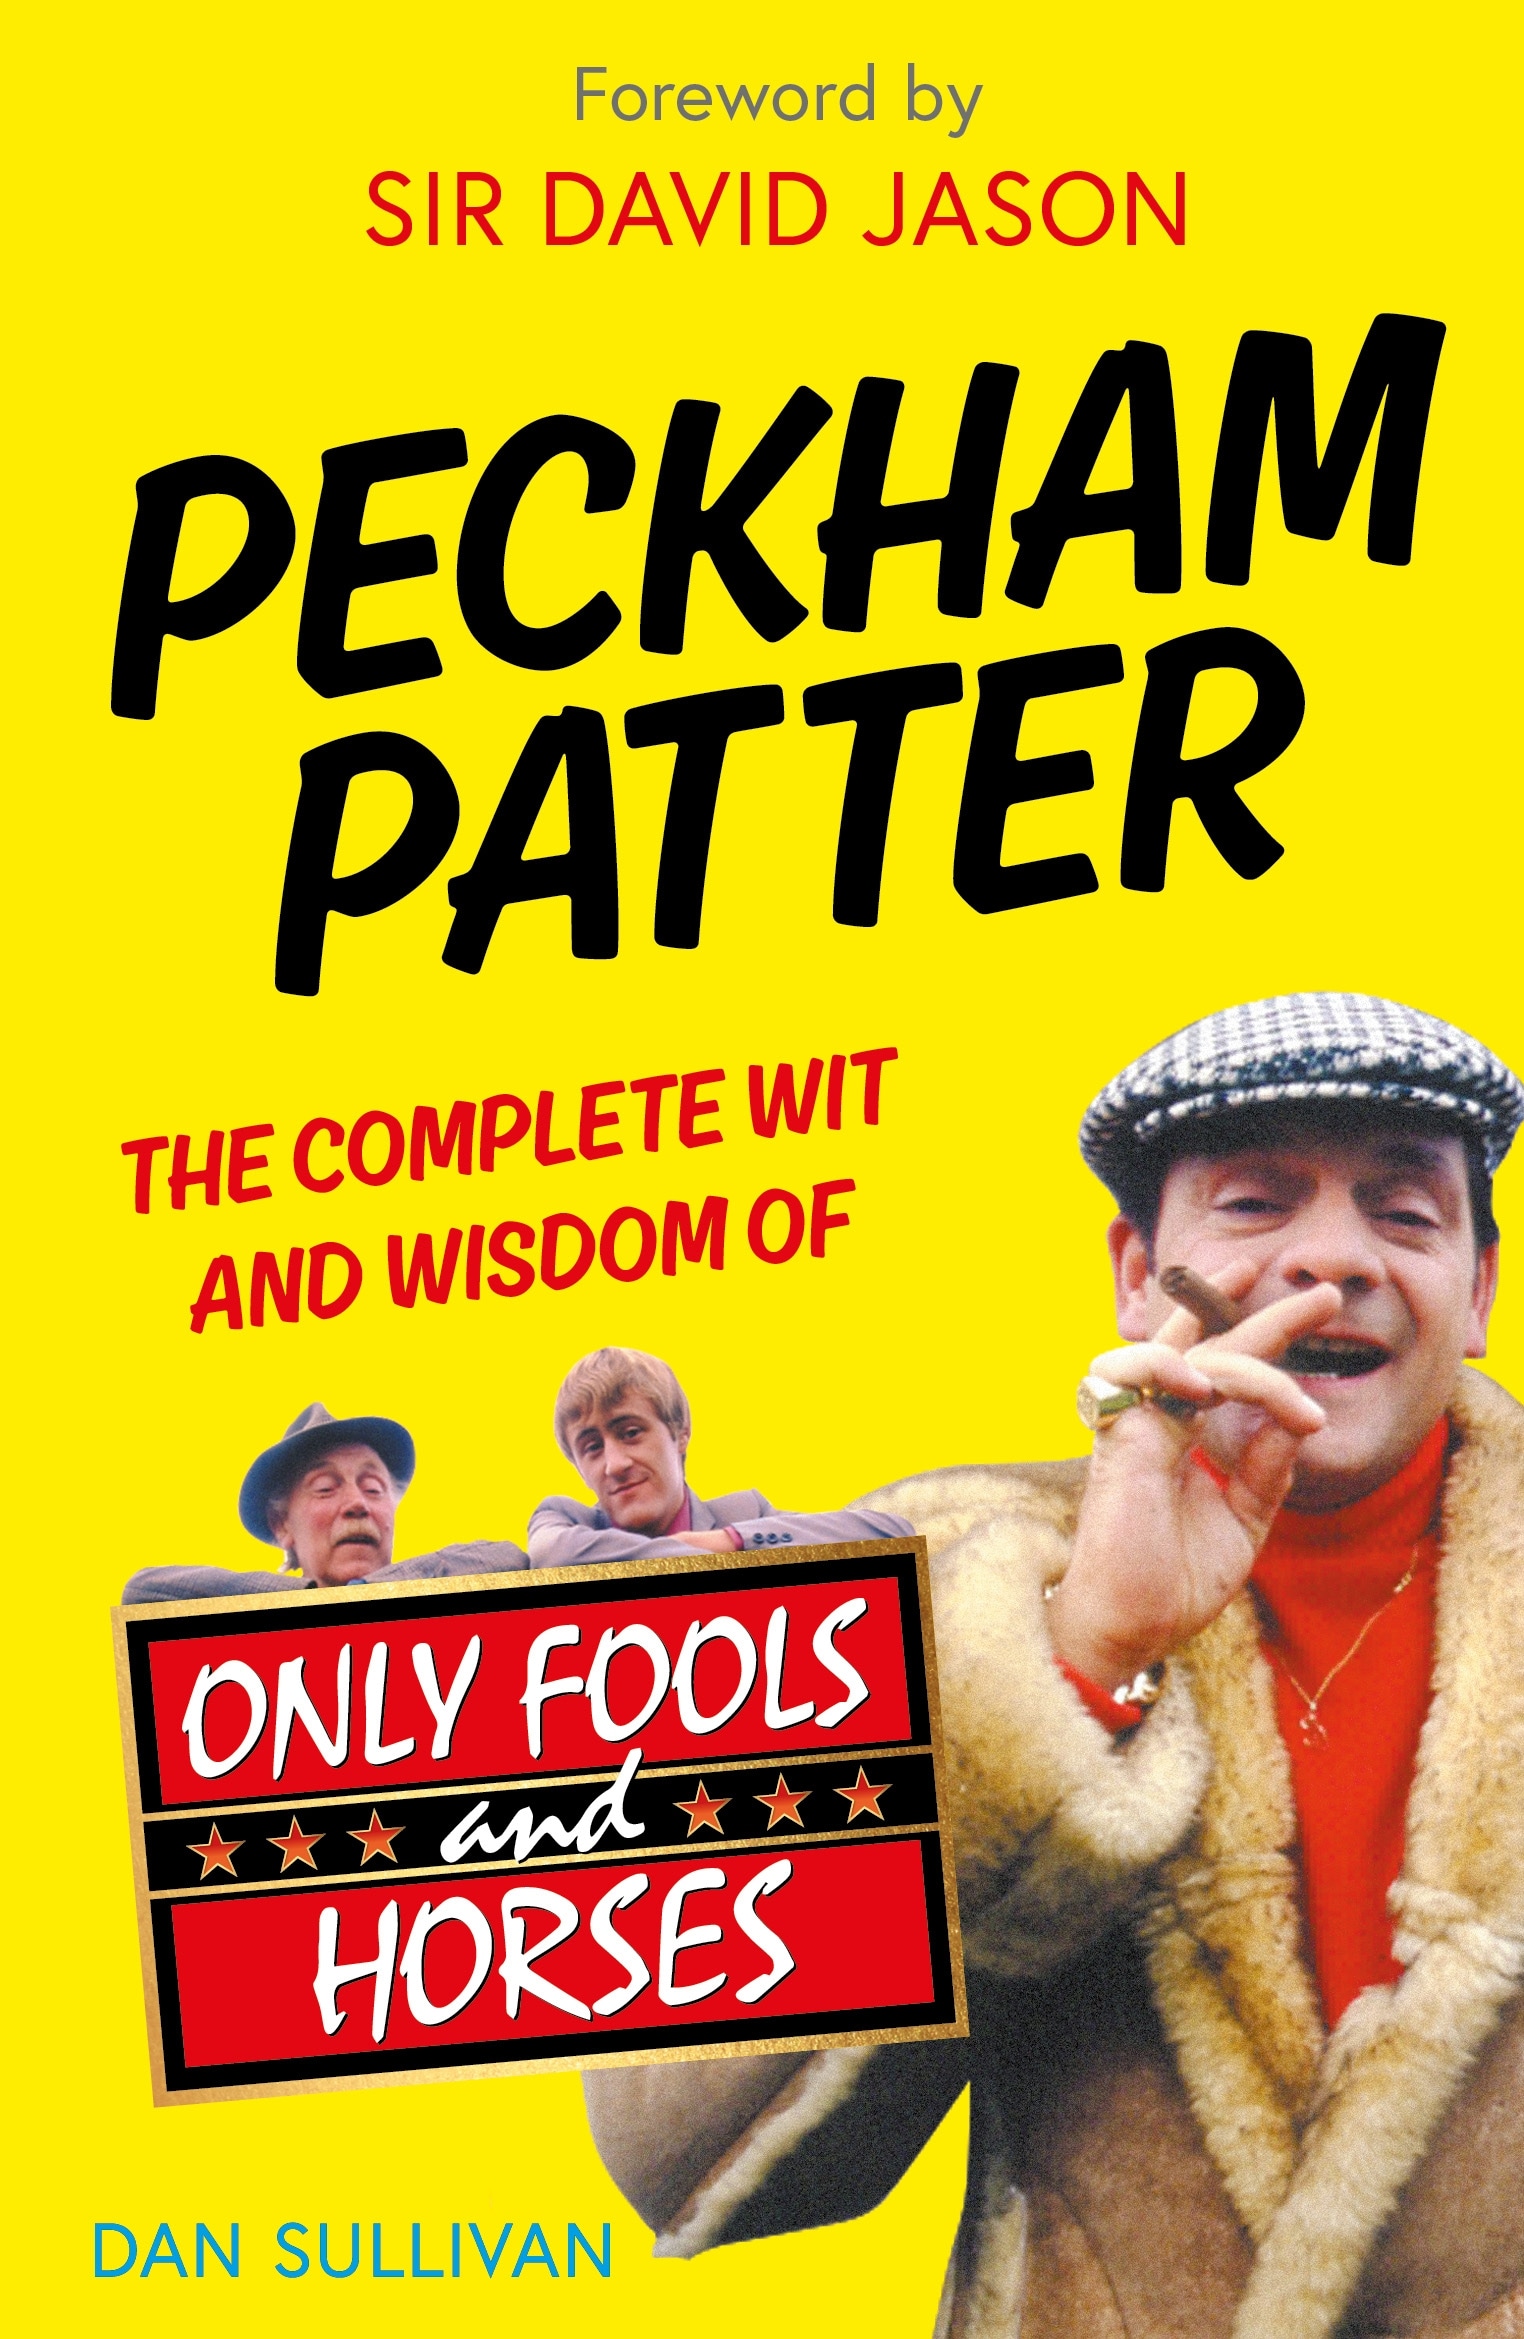 Book “Peckham Patter” by Dan Sullivan — November 4, 2021